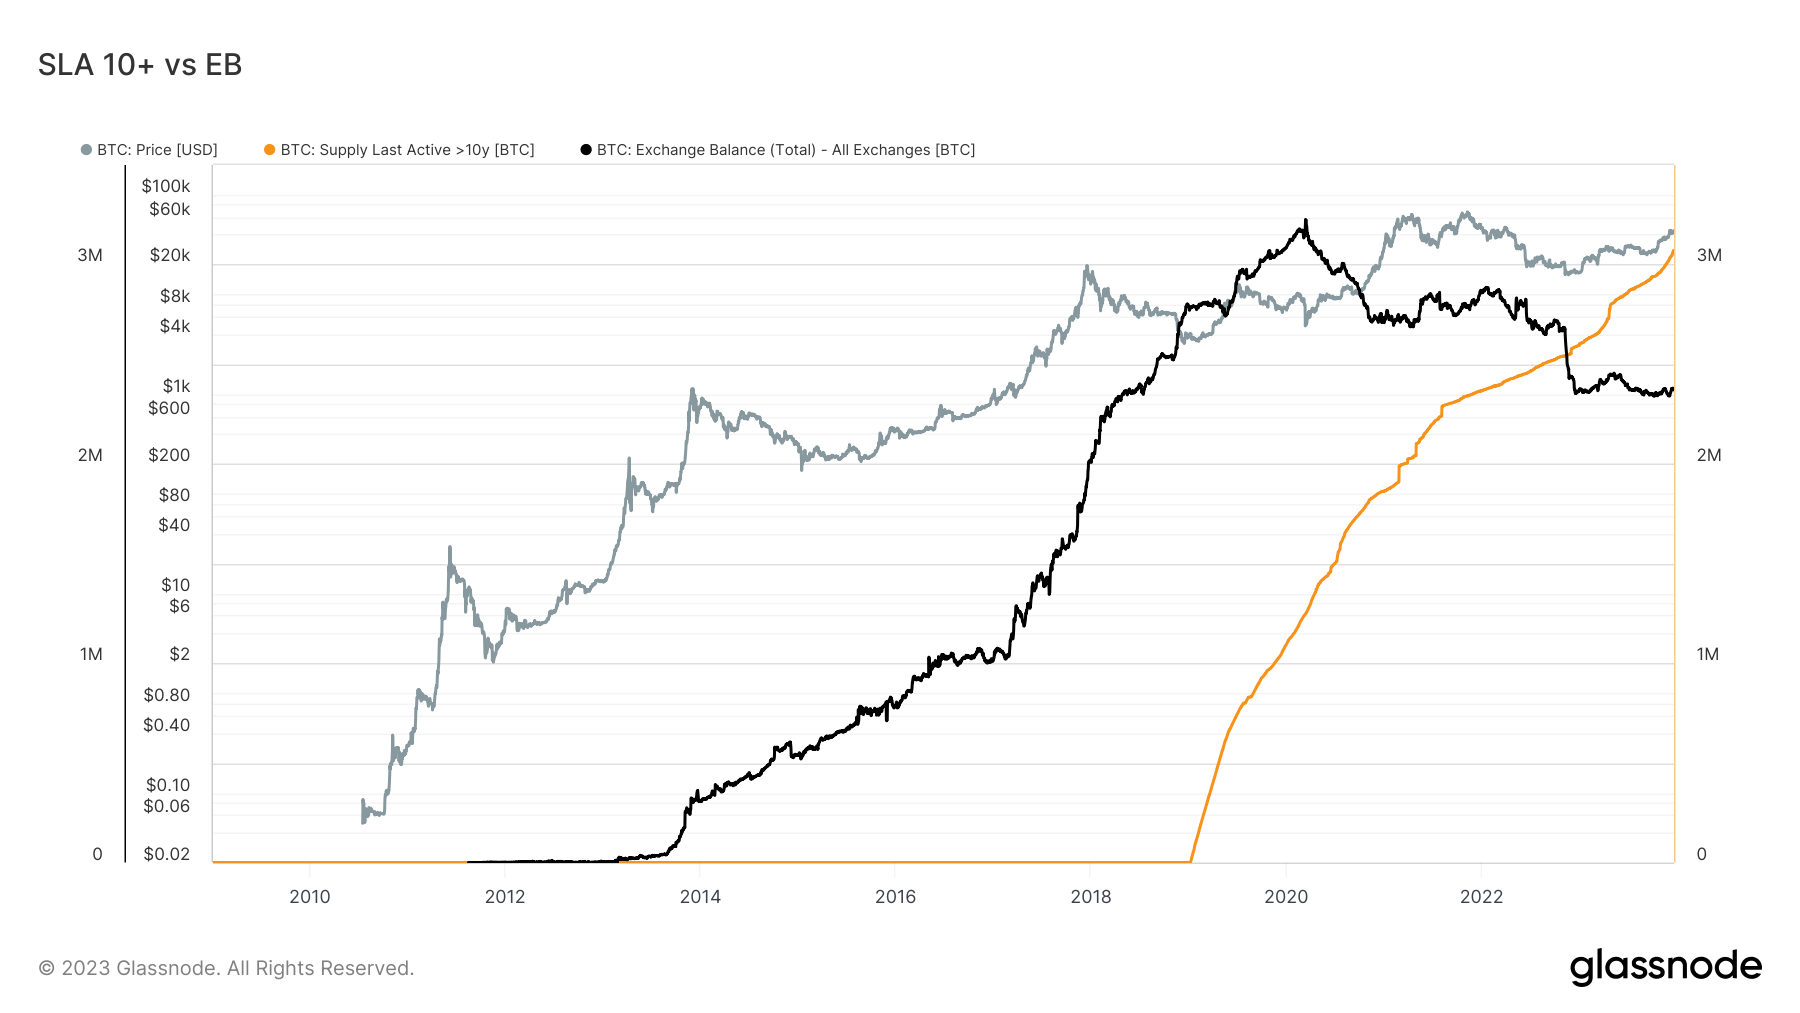 Over 3 million Bitcoins dormant for a decade signal long-term investor confidence